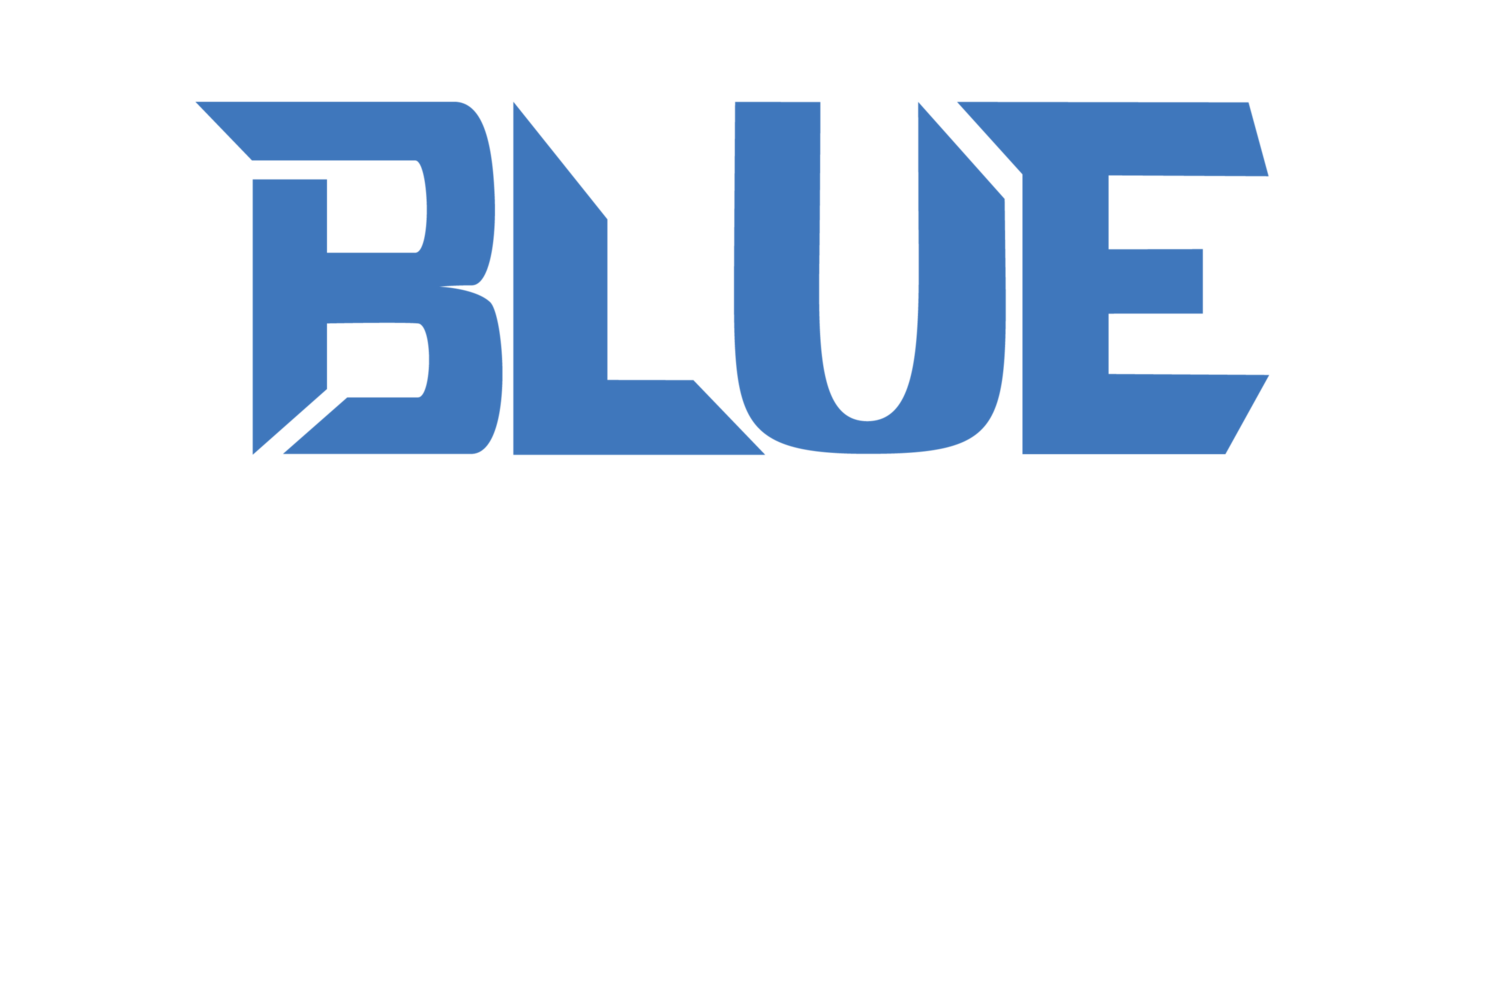 Blue Future